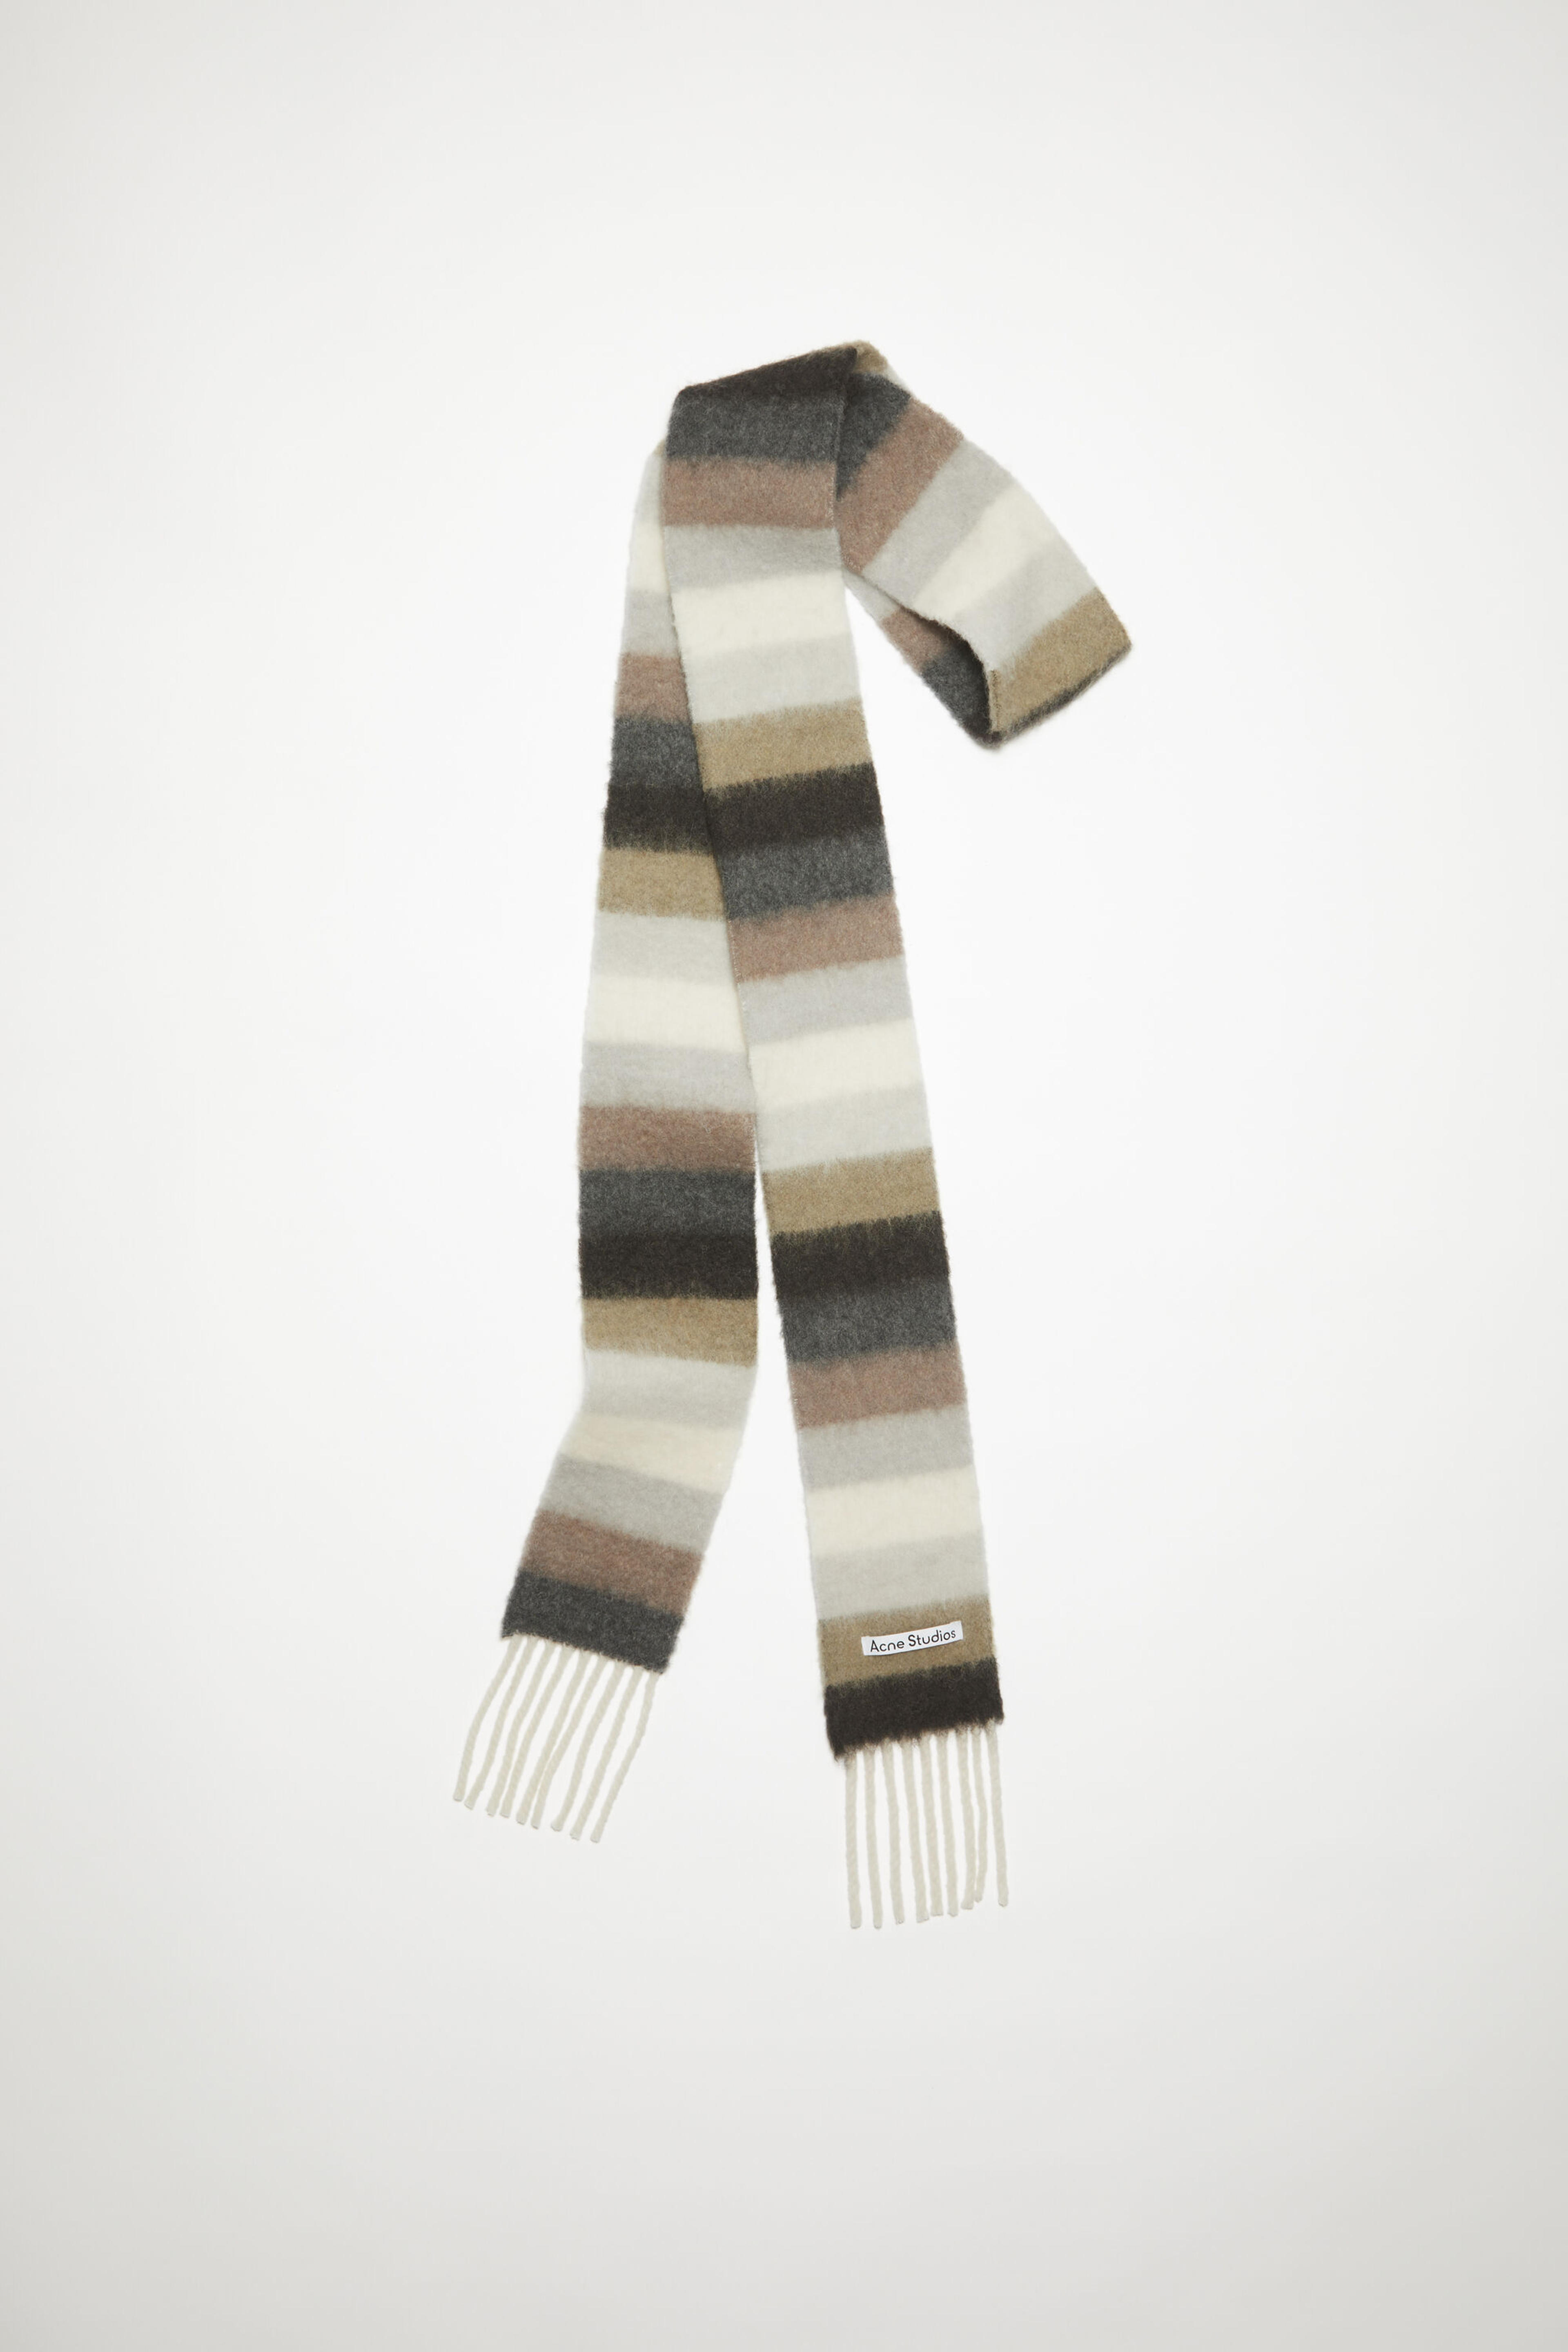 Acne Studios - Wool-apaca fringe scarf - Skinny - Olive green/grey